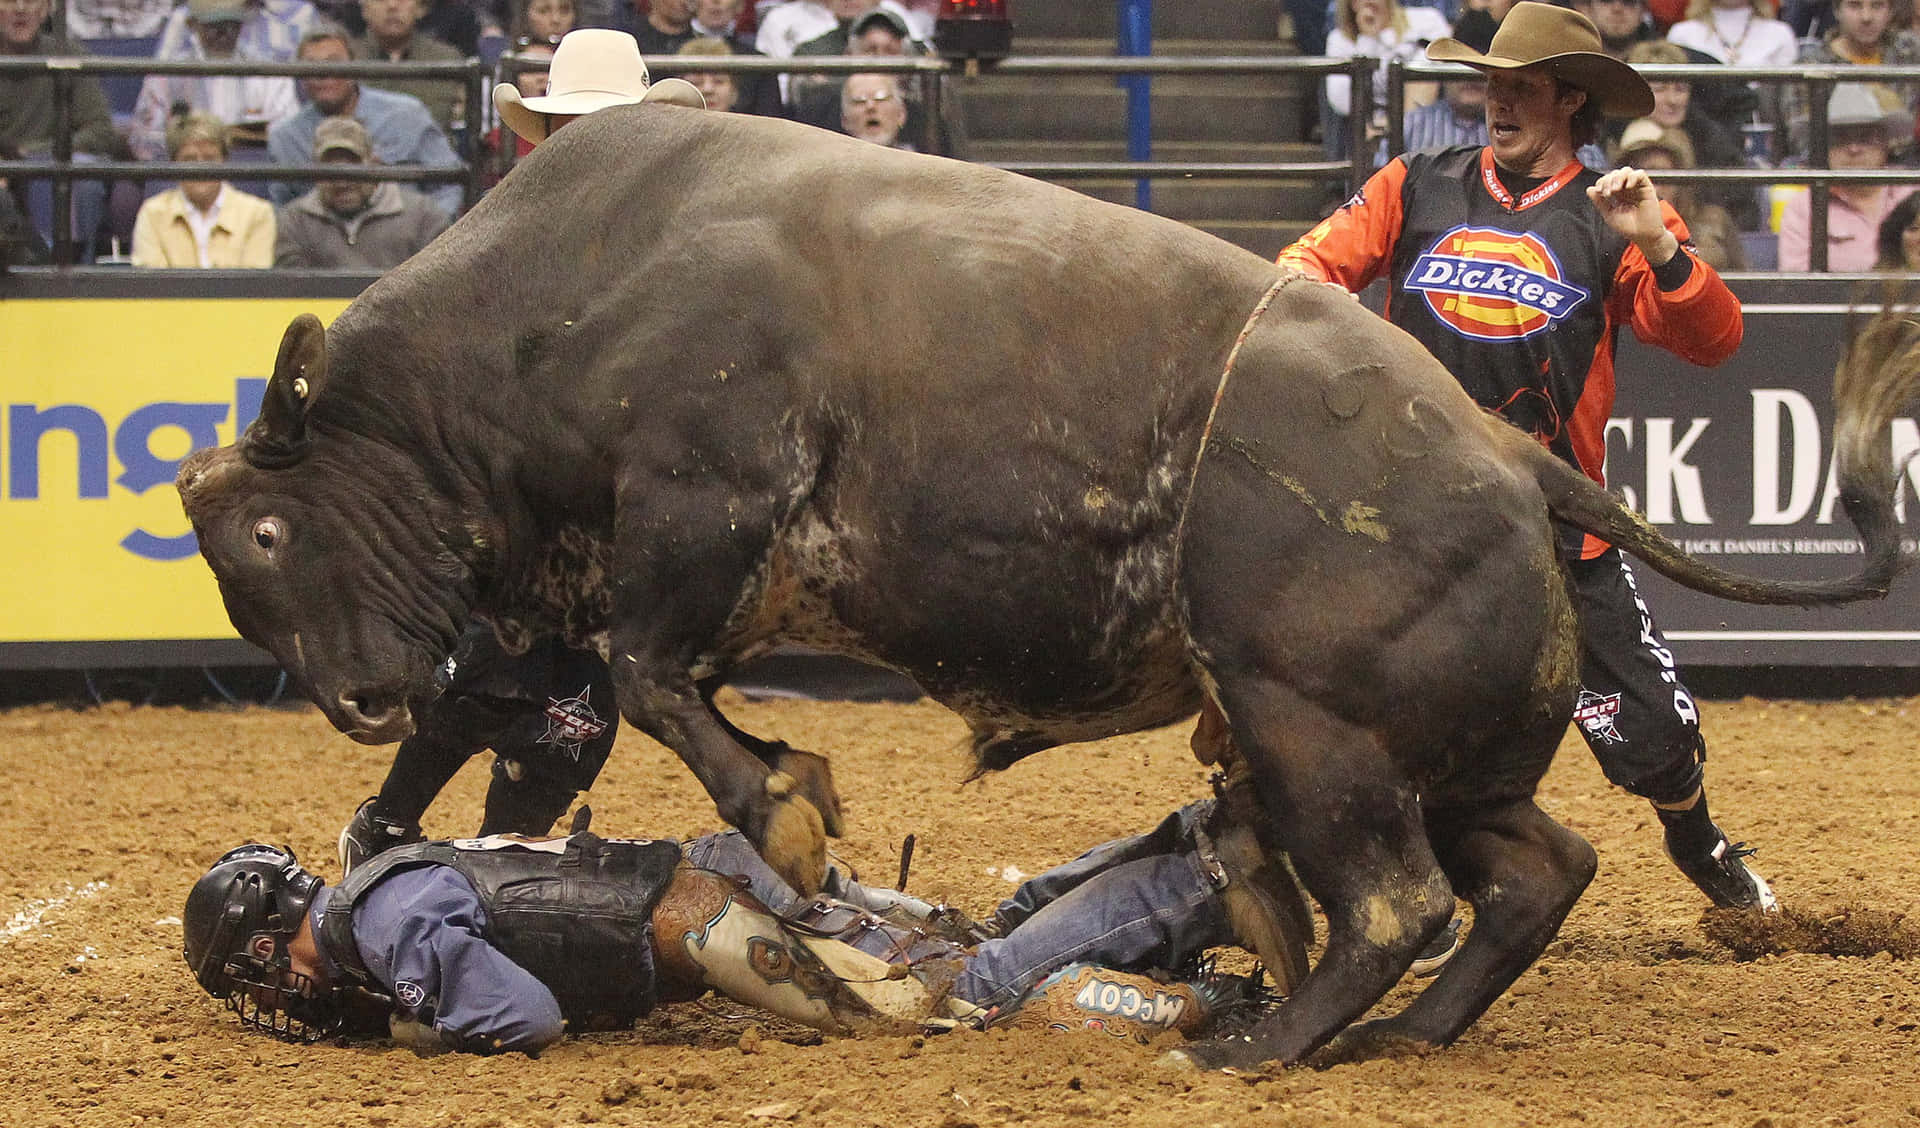 Professional bull rider taming the beast